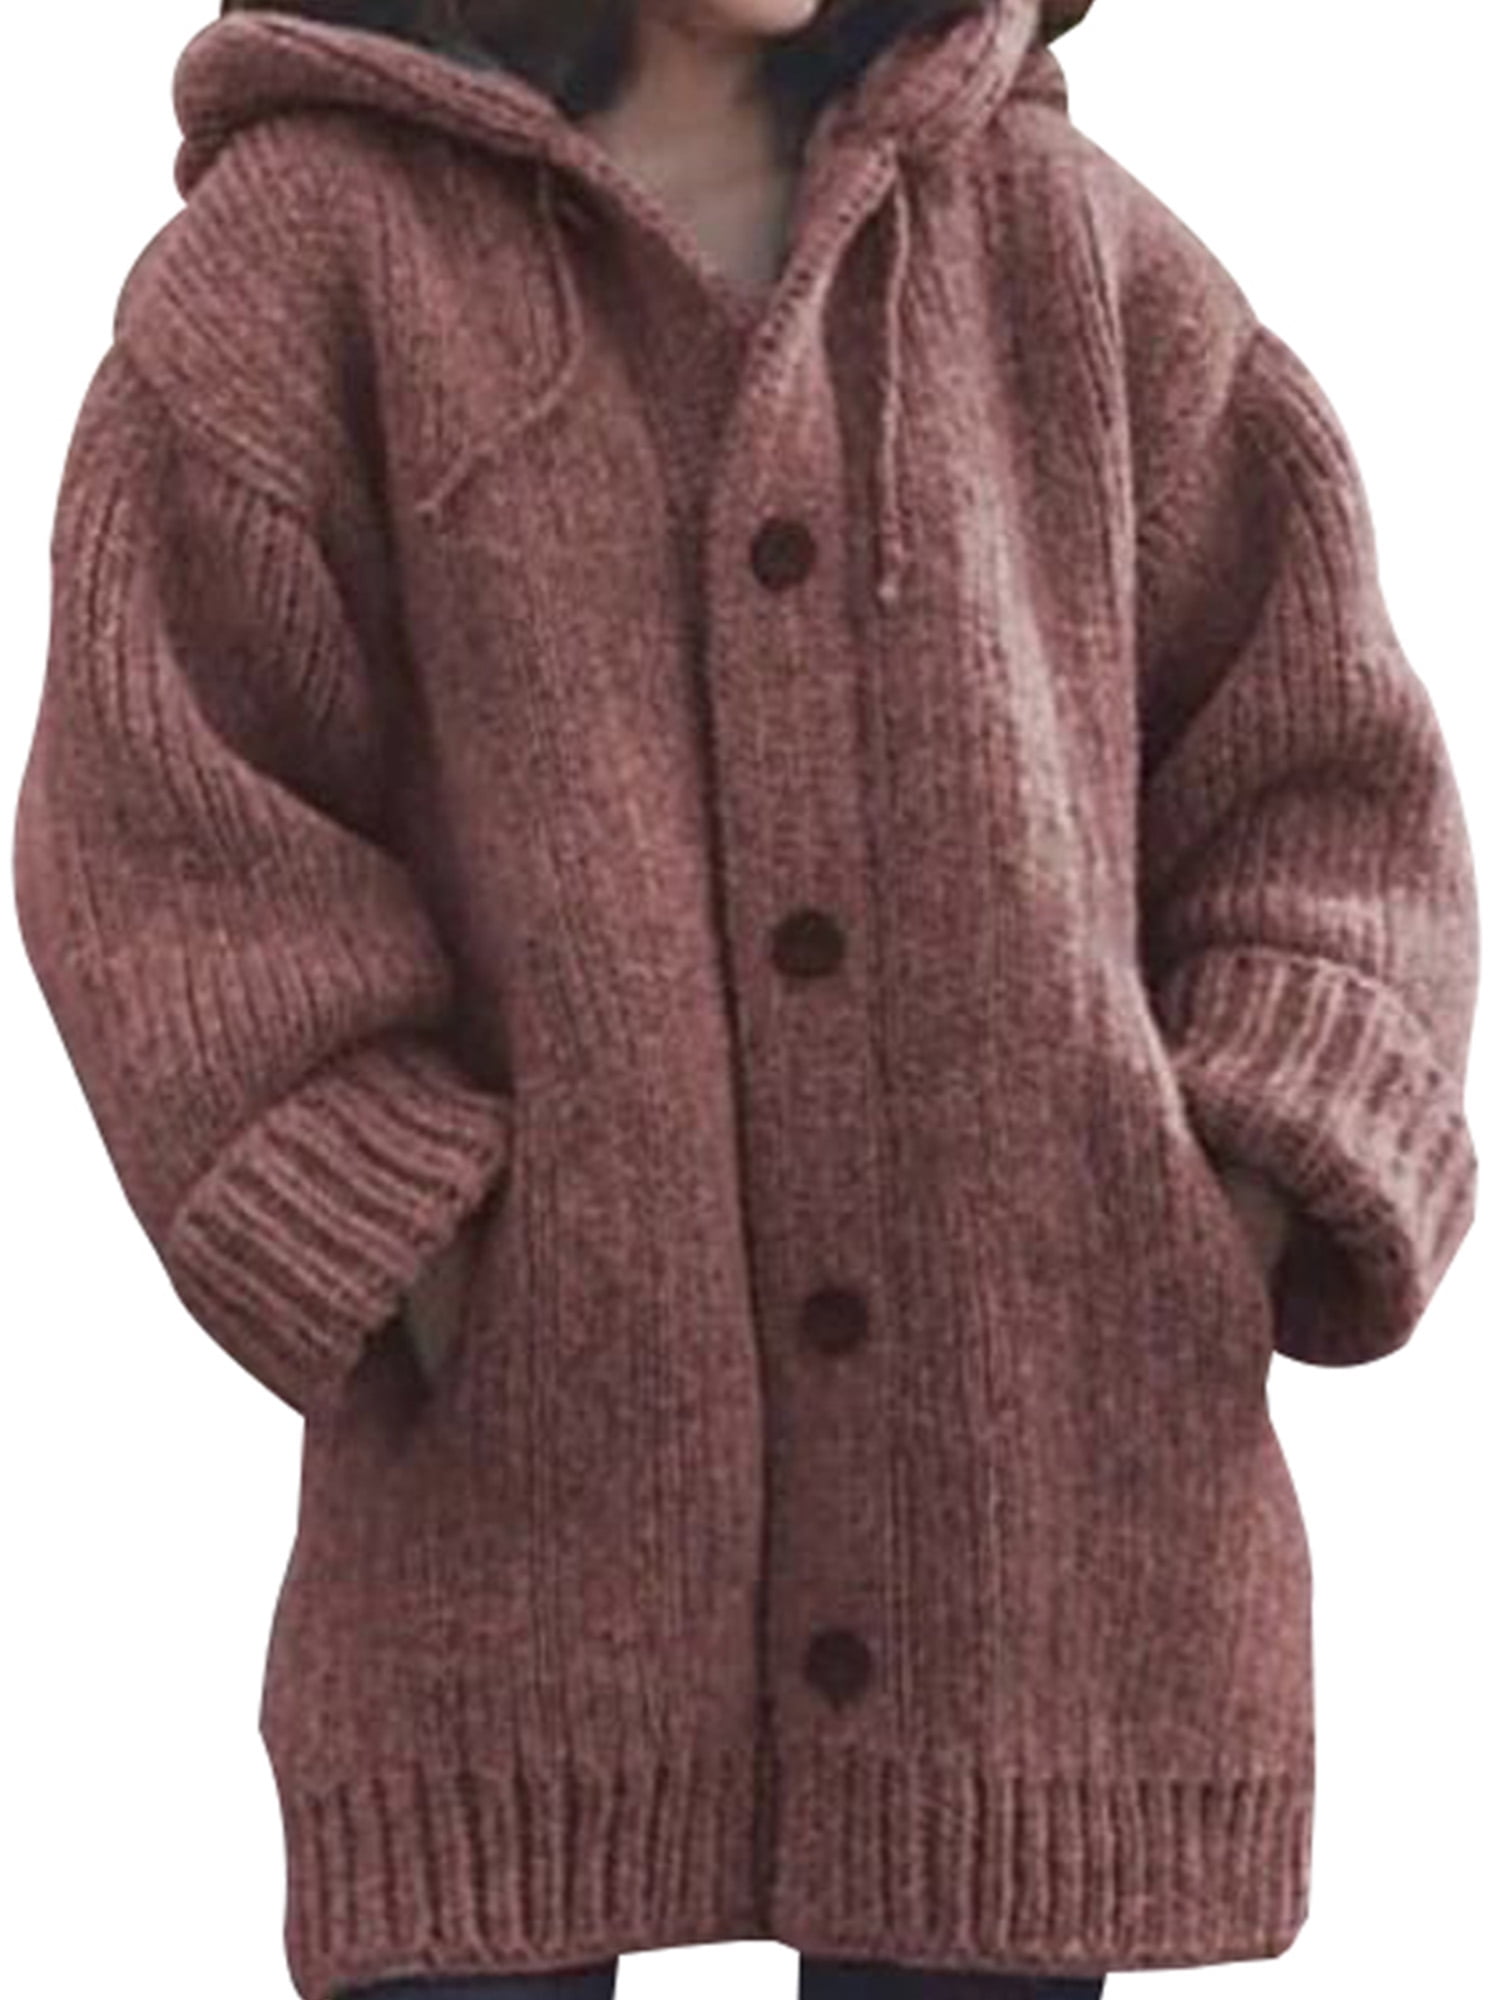 Mallimoda Boys Long Sleeve V-Neck Button Cardigan Knit Sweater Coat